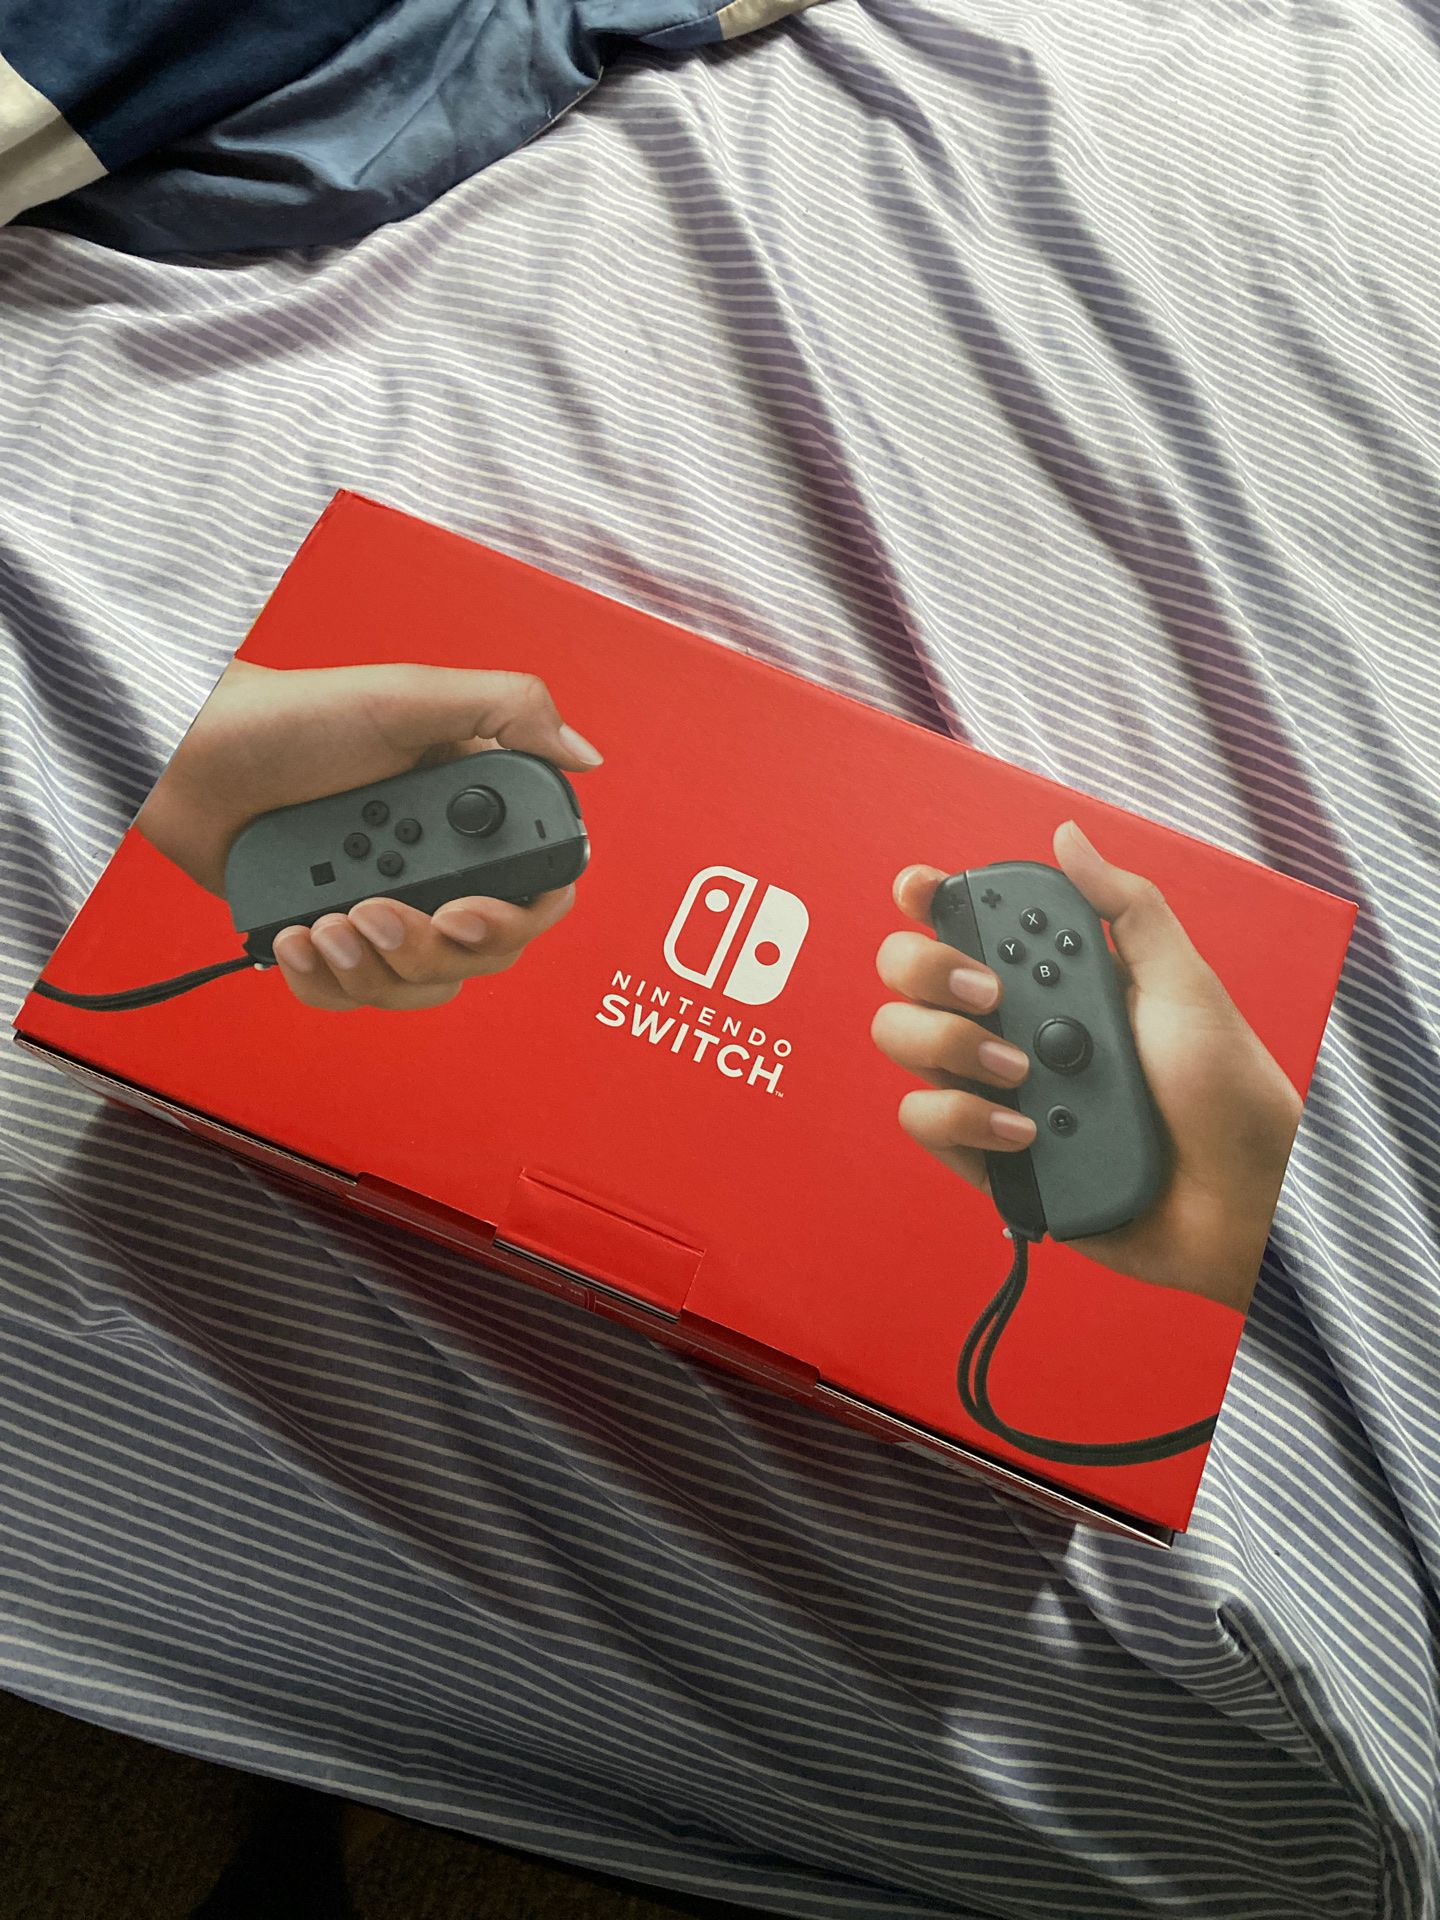 NEW Nintendo Switch GRAY (NEWEST MODEL)